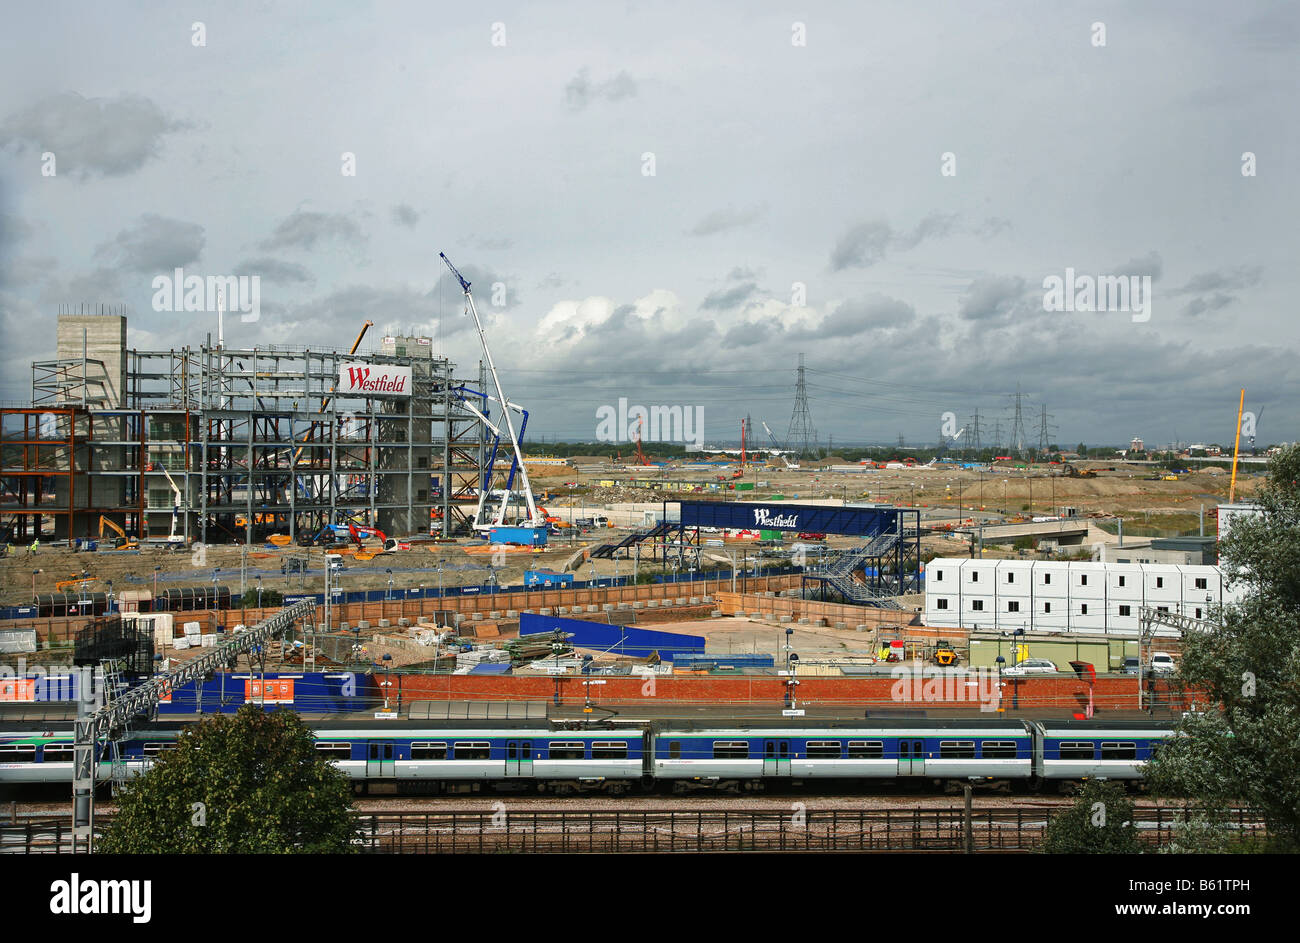 stratford city construction train station 2012 olympics westfield shopping centre Stock Photo